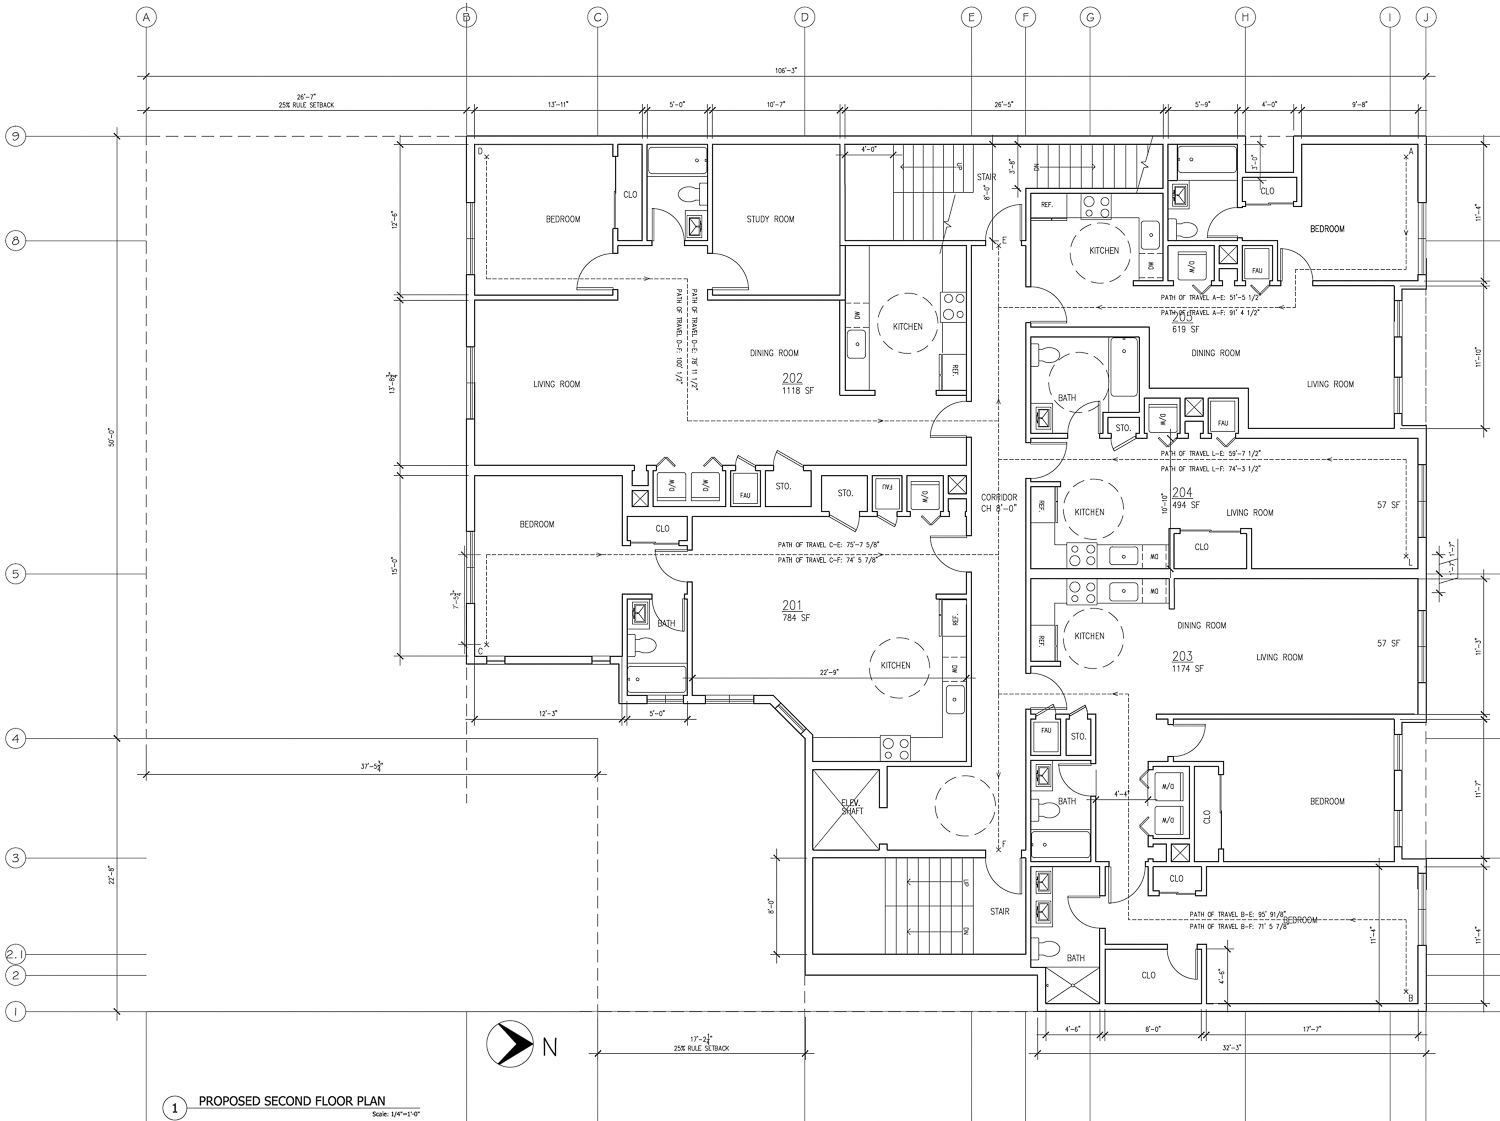 2419 Lombard Street floor plan, illustration by HC Design